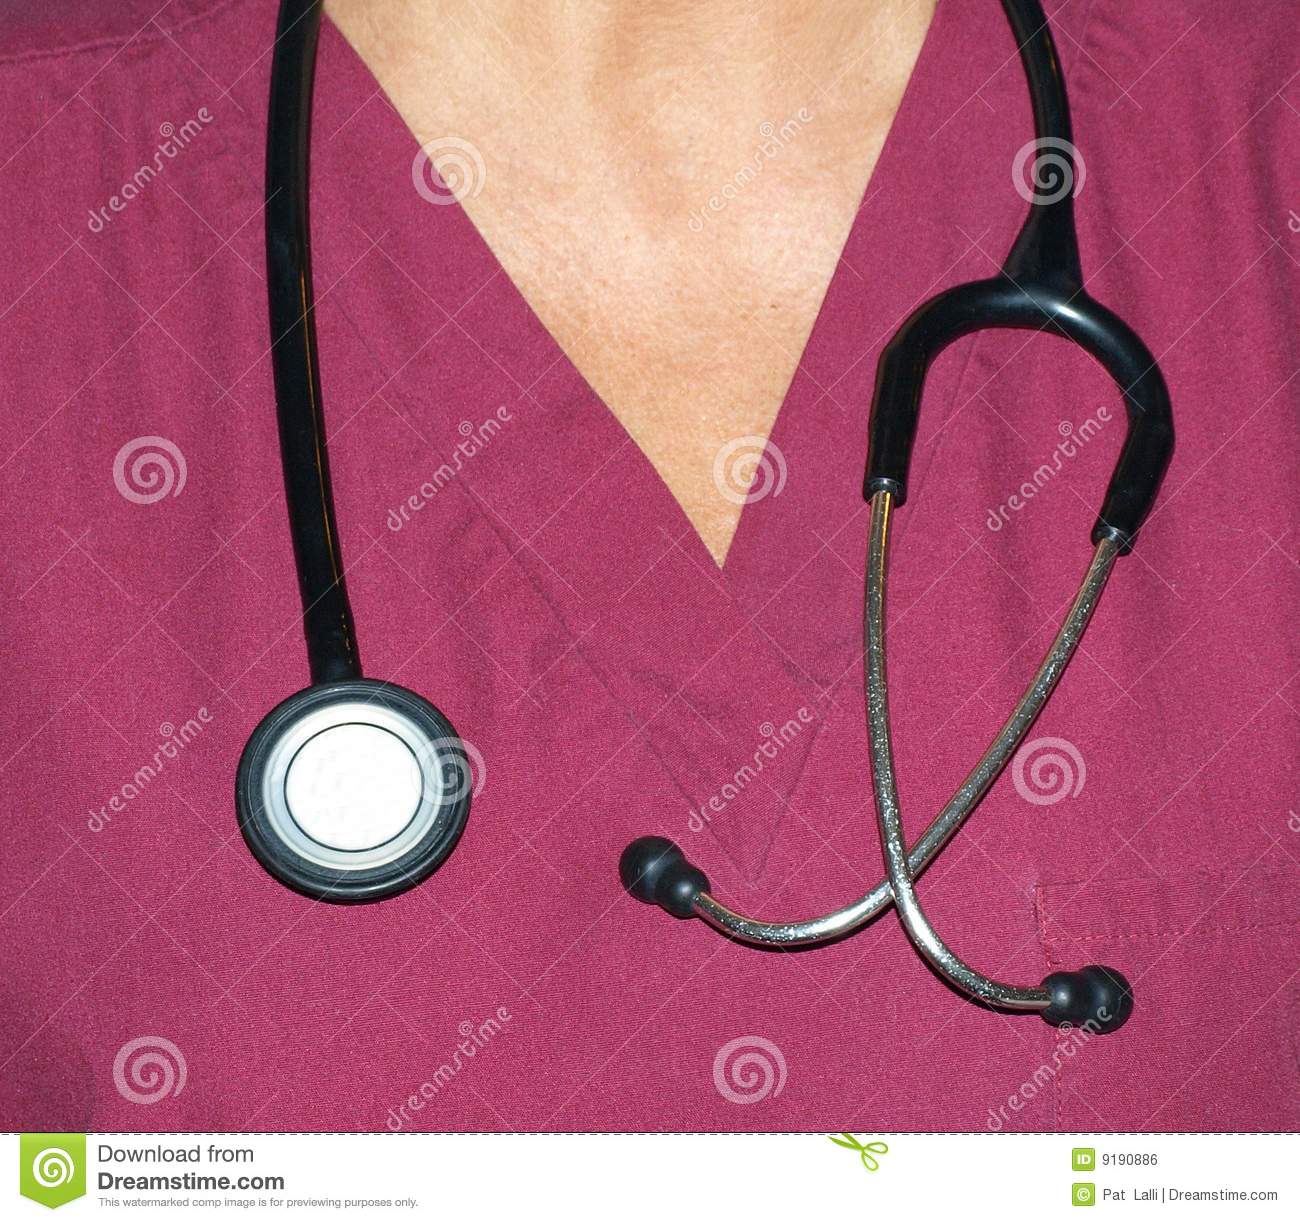 Stethoscope around neck clipart